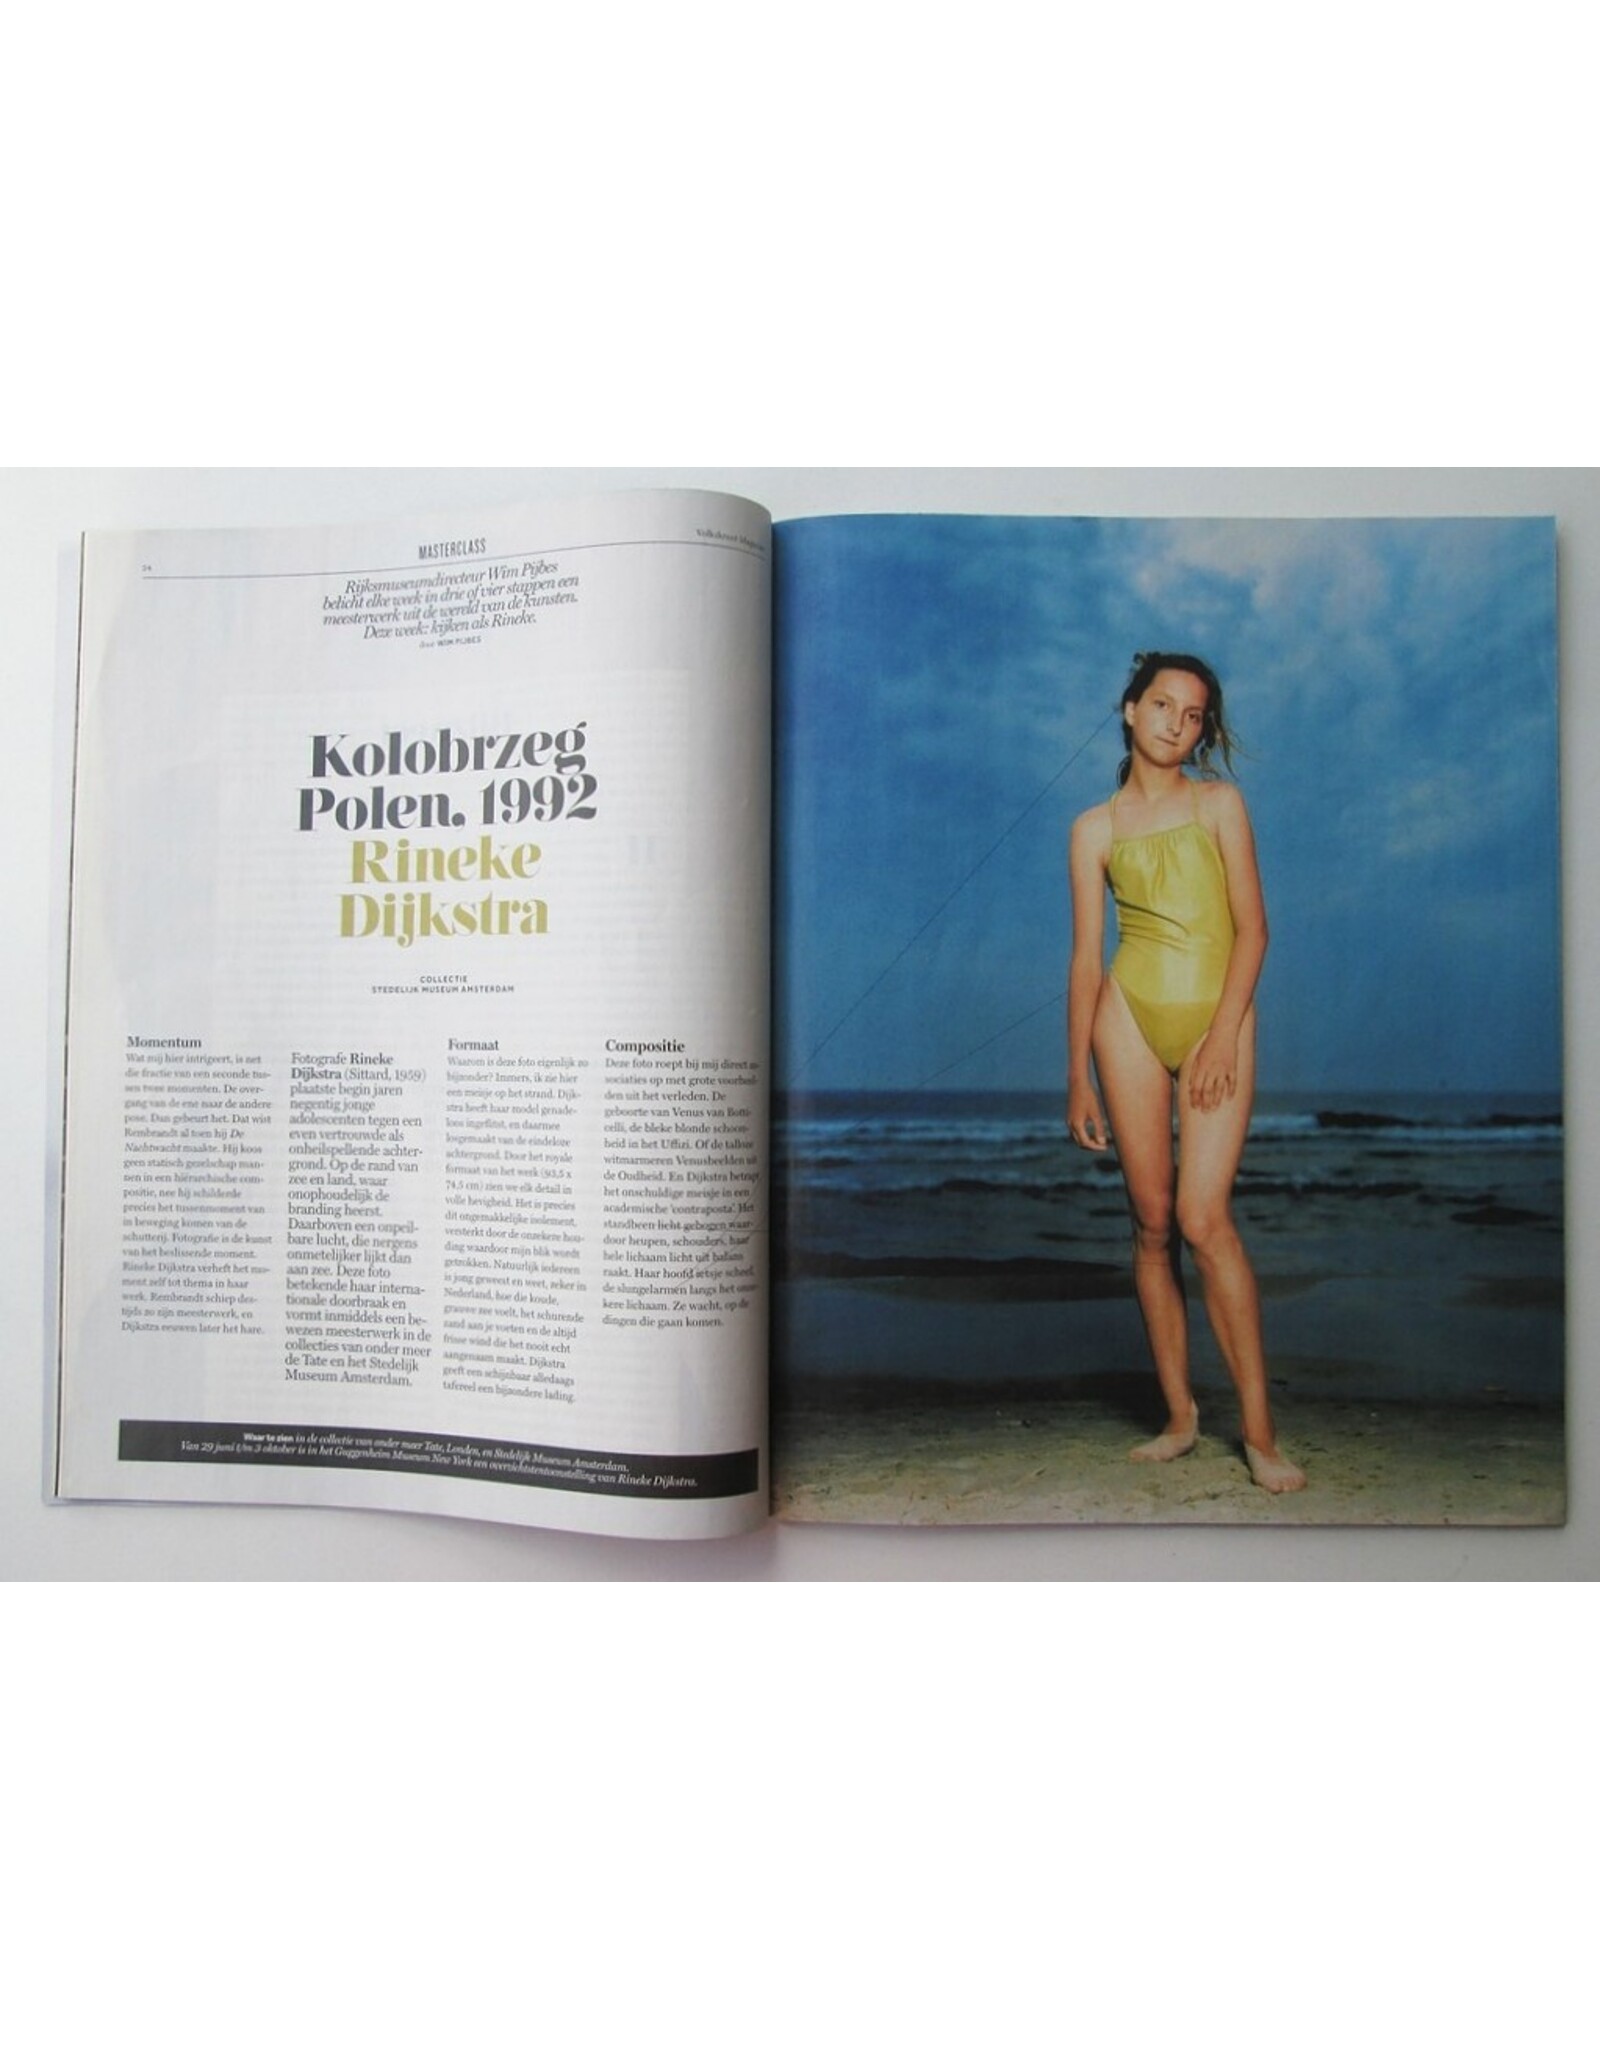 Rineke Dijkstra [e.a.] - Volkskrant Magazine 600: [Raket! 50 jaar Cultuuricoon]